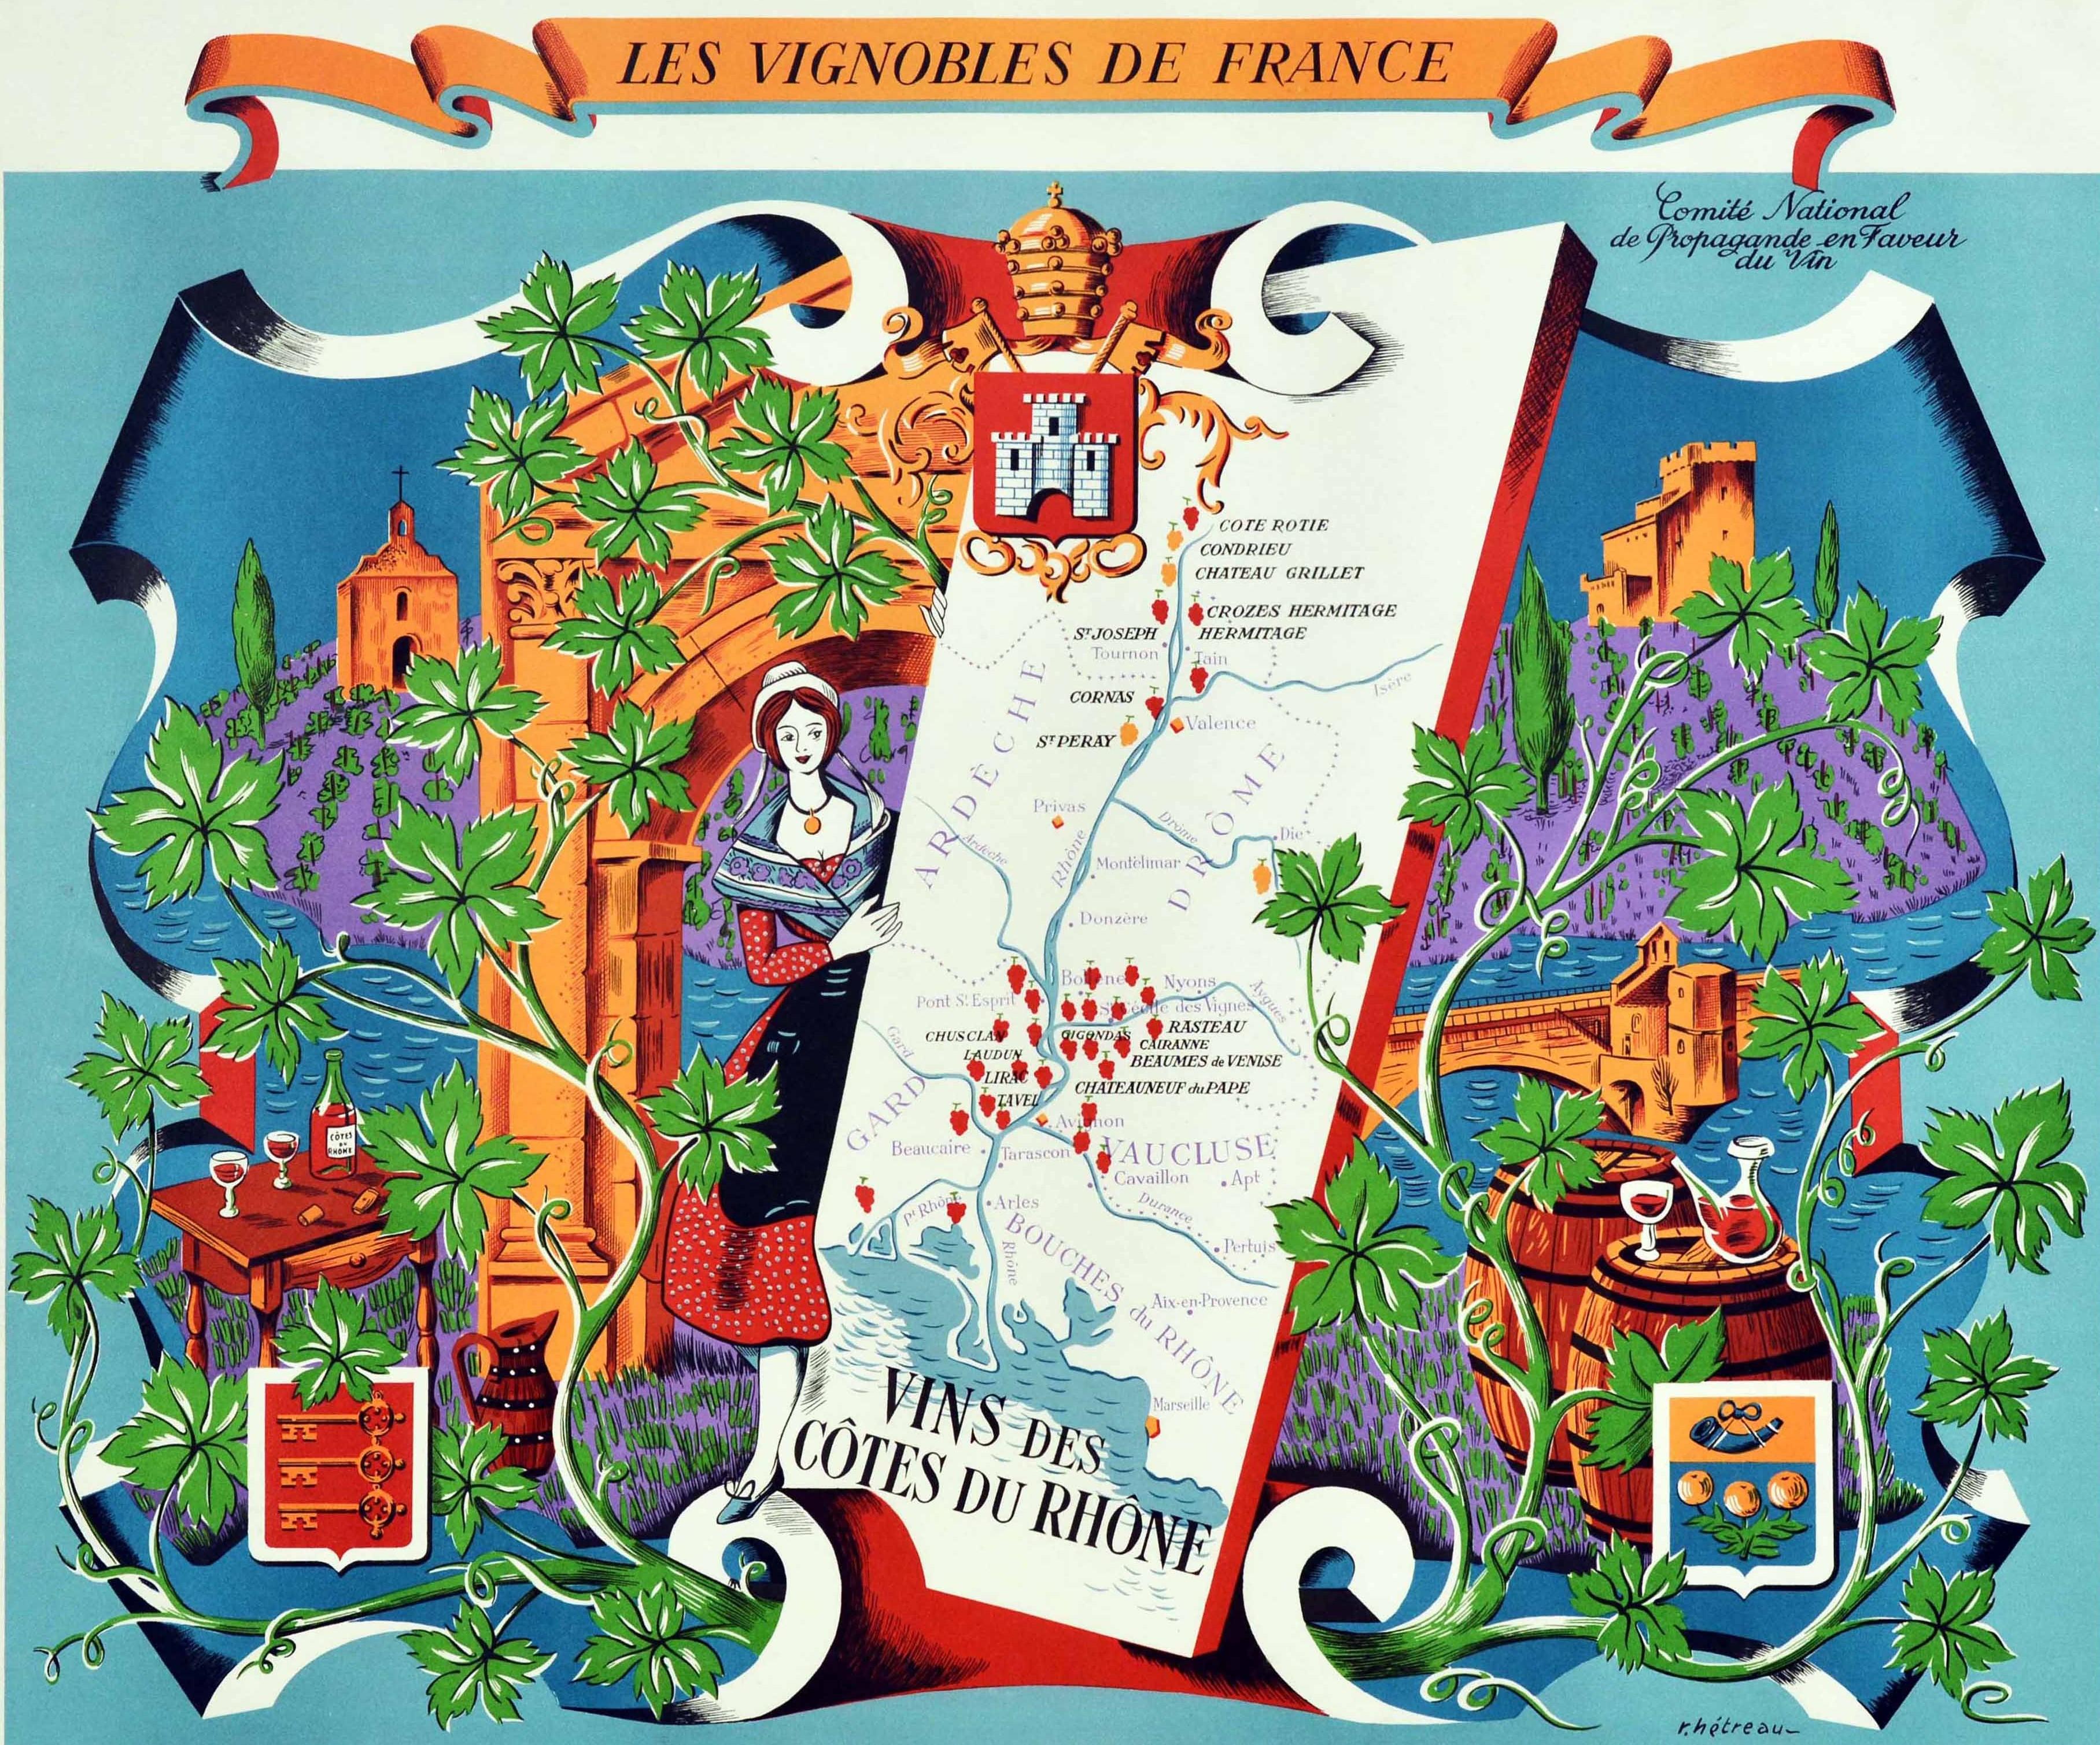 Original vintage drink advertising poster promoting French wines (one of a series issued by the Comite National de Propagande en Faveur du Vin national committee for the promotion of wine): Les Vignobles de France Vins des Cotes du Rhone / The